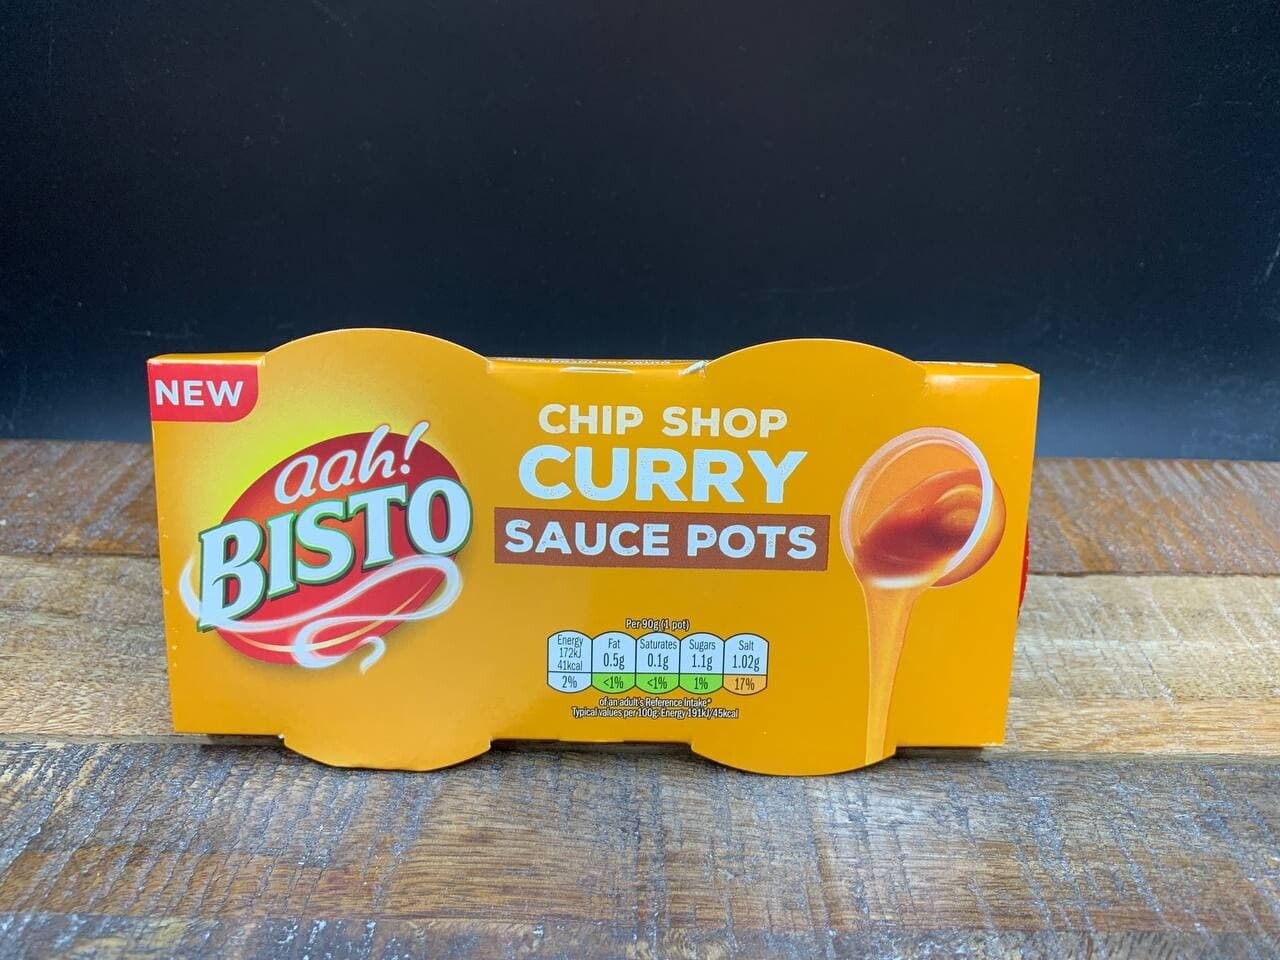 Bisto Chip Shop Curry Sauce Pots 2x90g